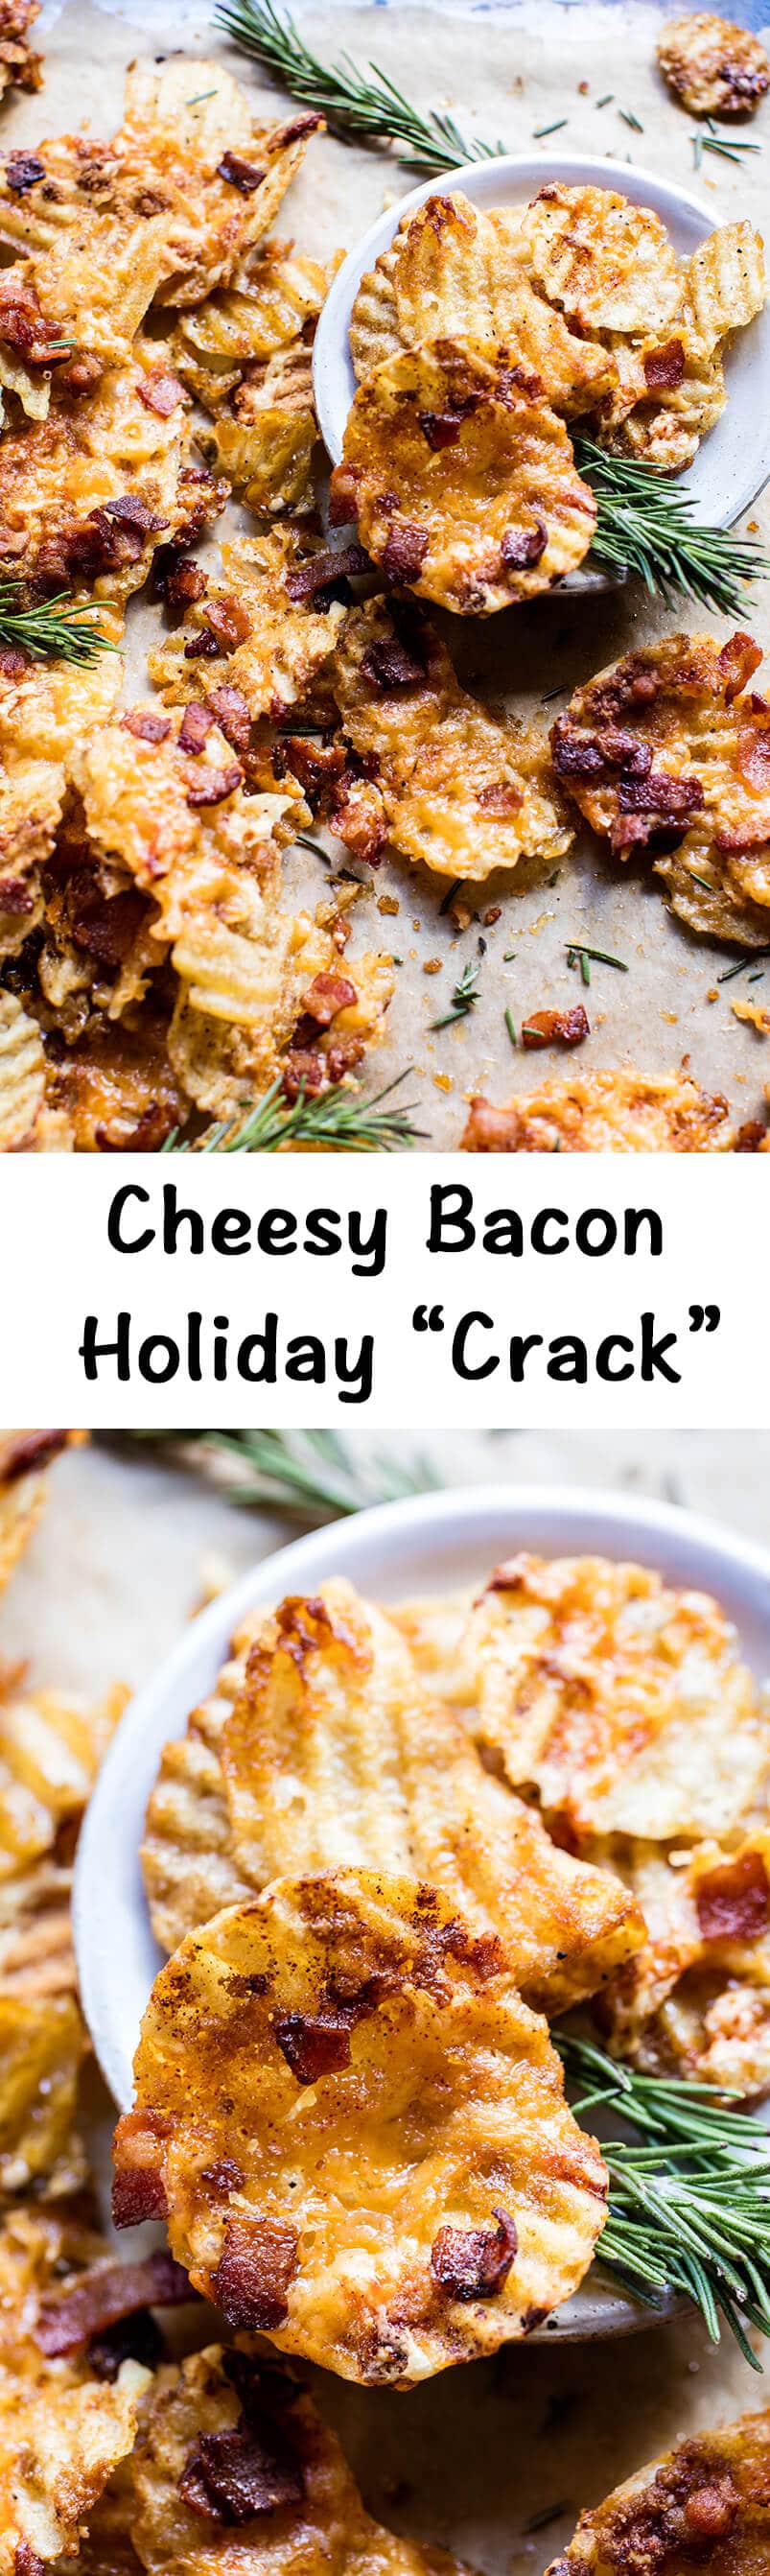 Cheesy Bacon Holiday Crack | halfbakedharvest.com @hbharvest